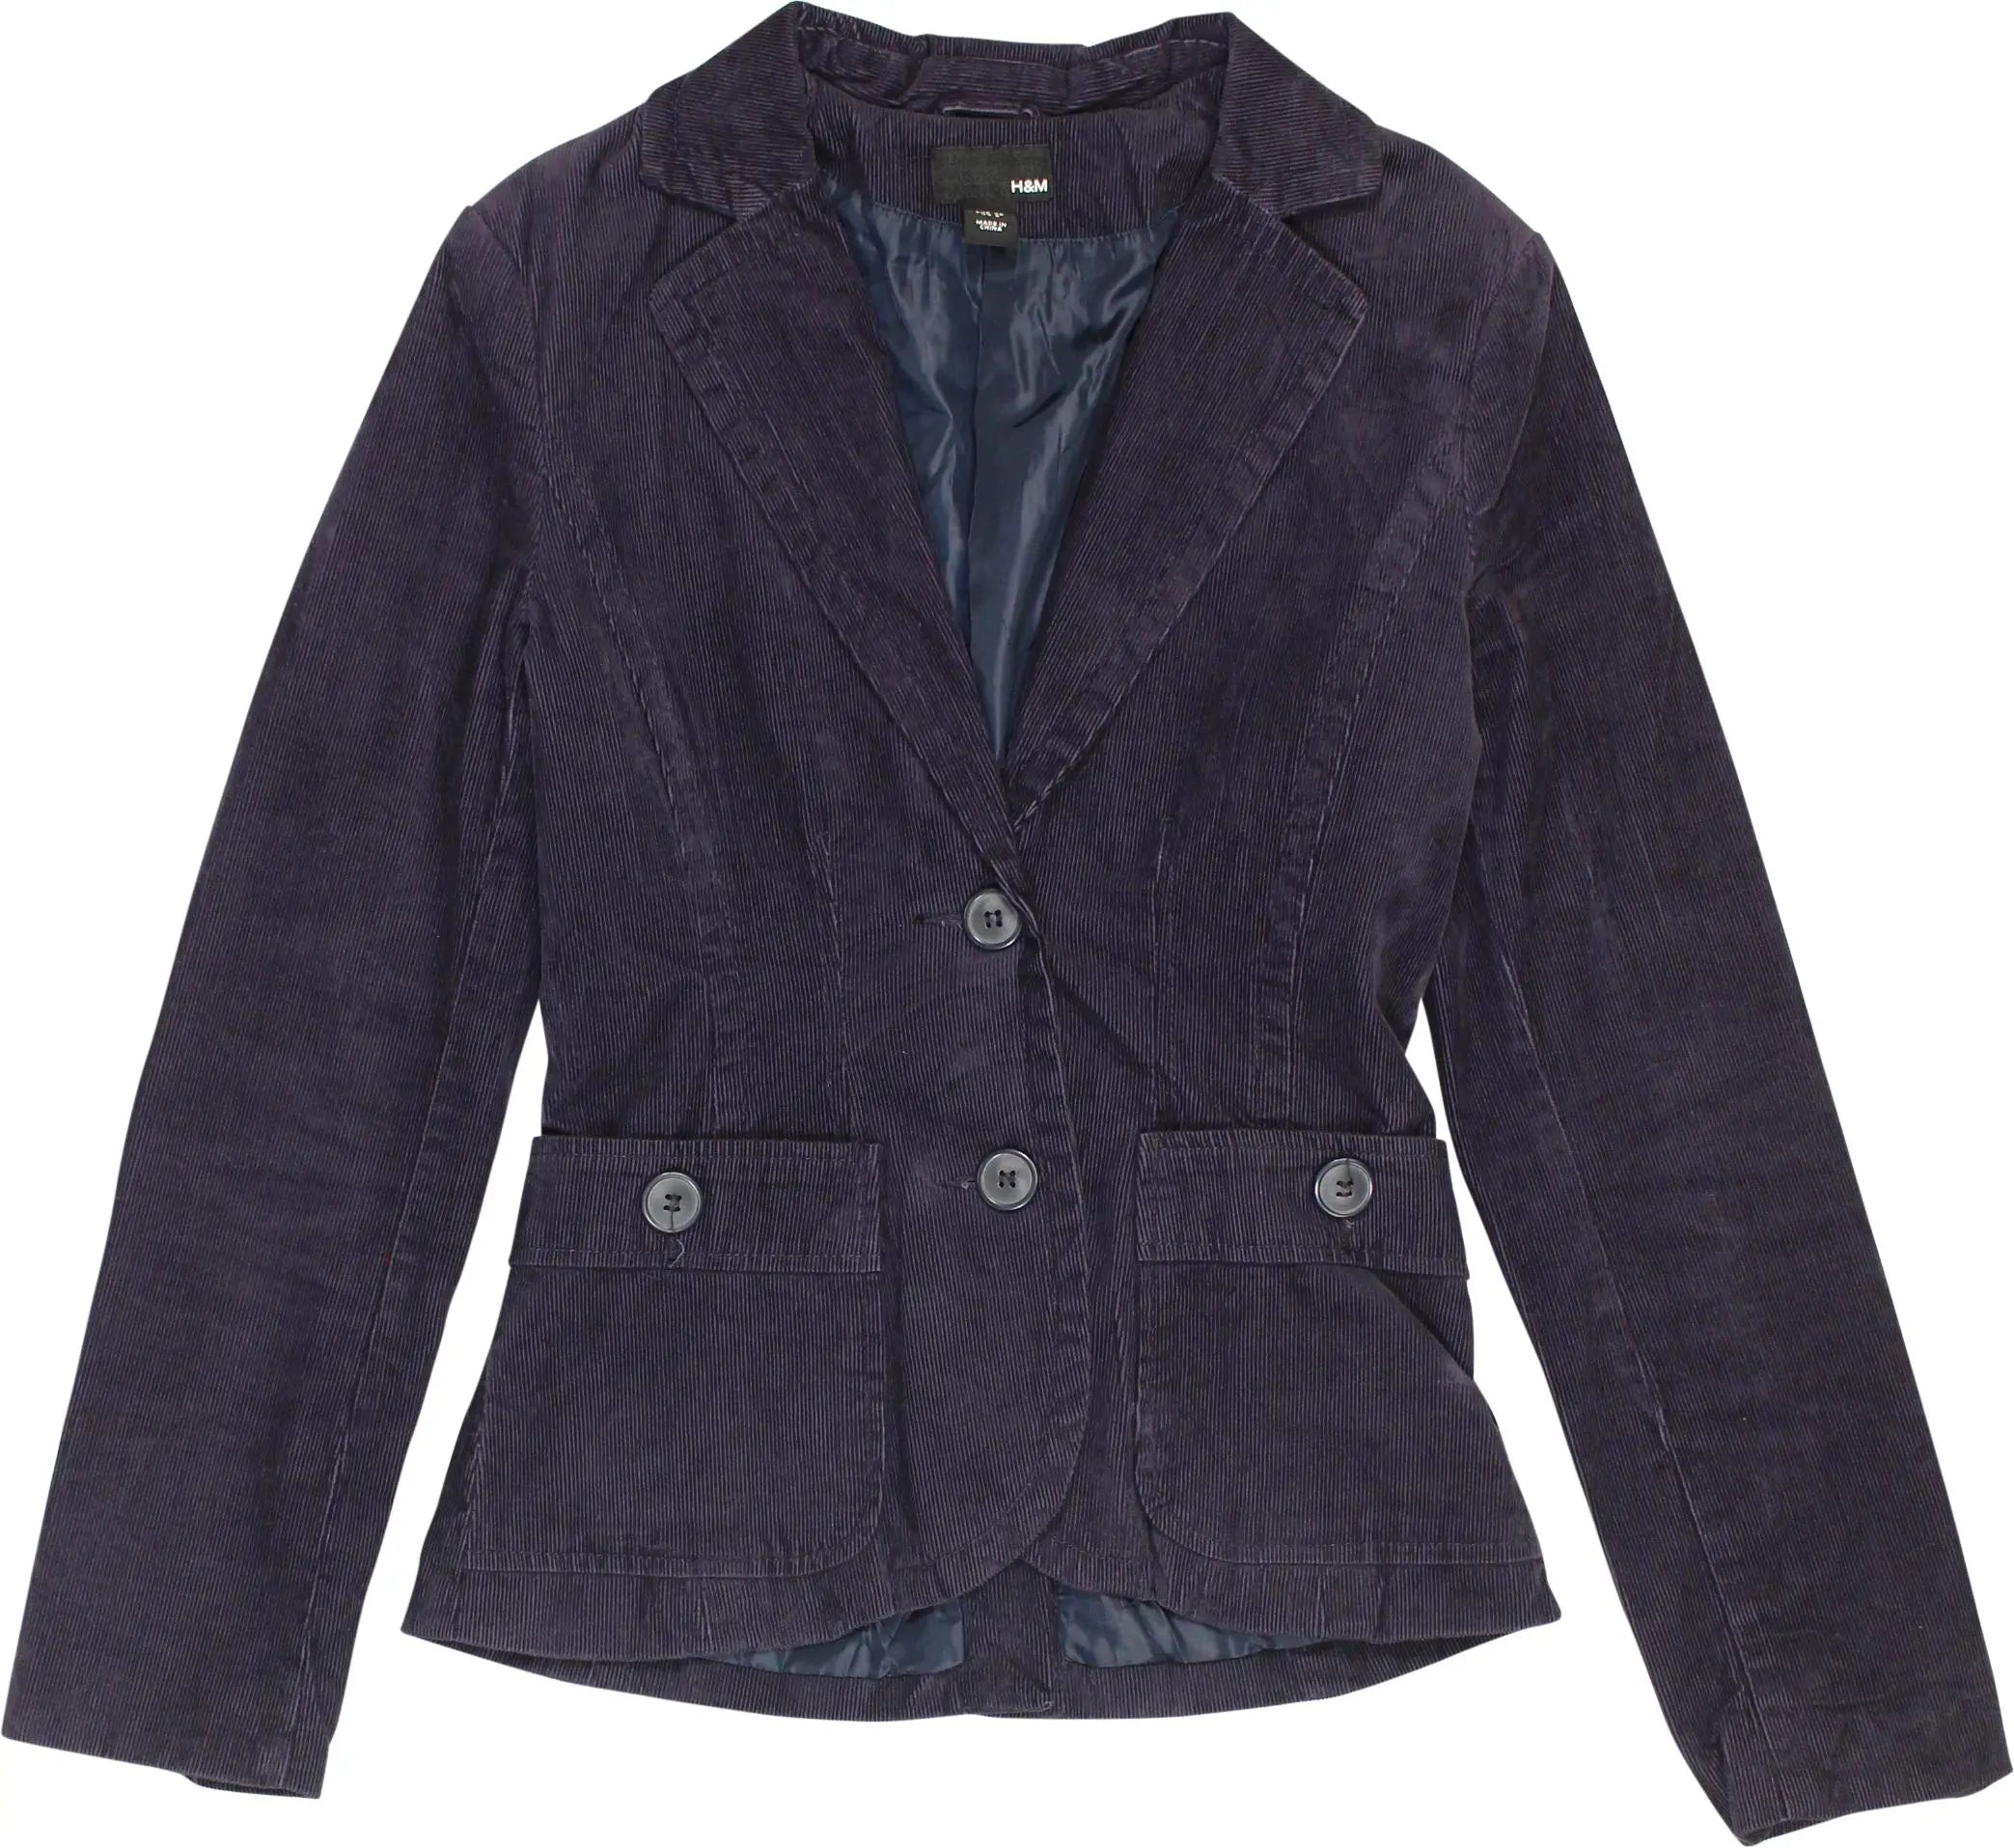 H&M - Purple Corduroy Blazer- ThriftTale.com - Vintage and second handclothing